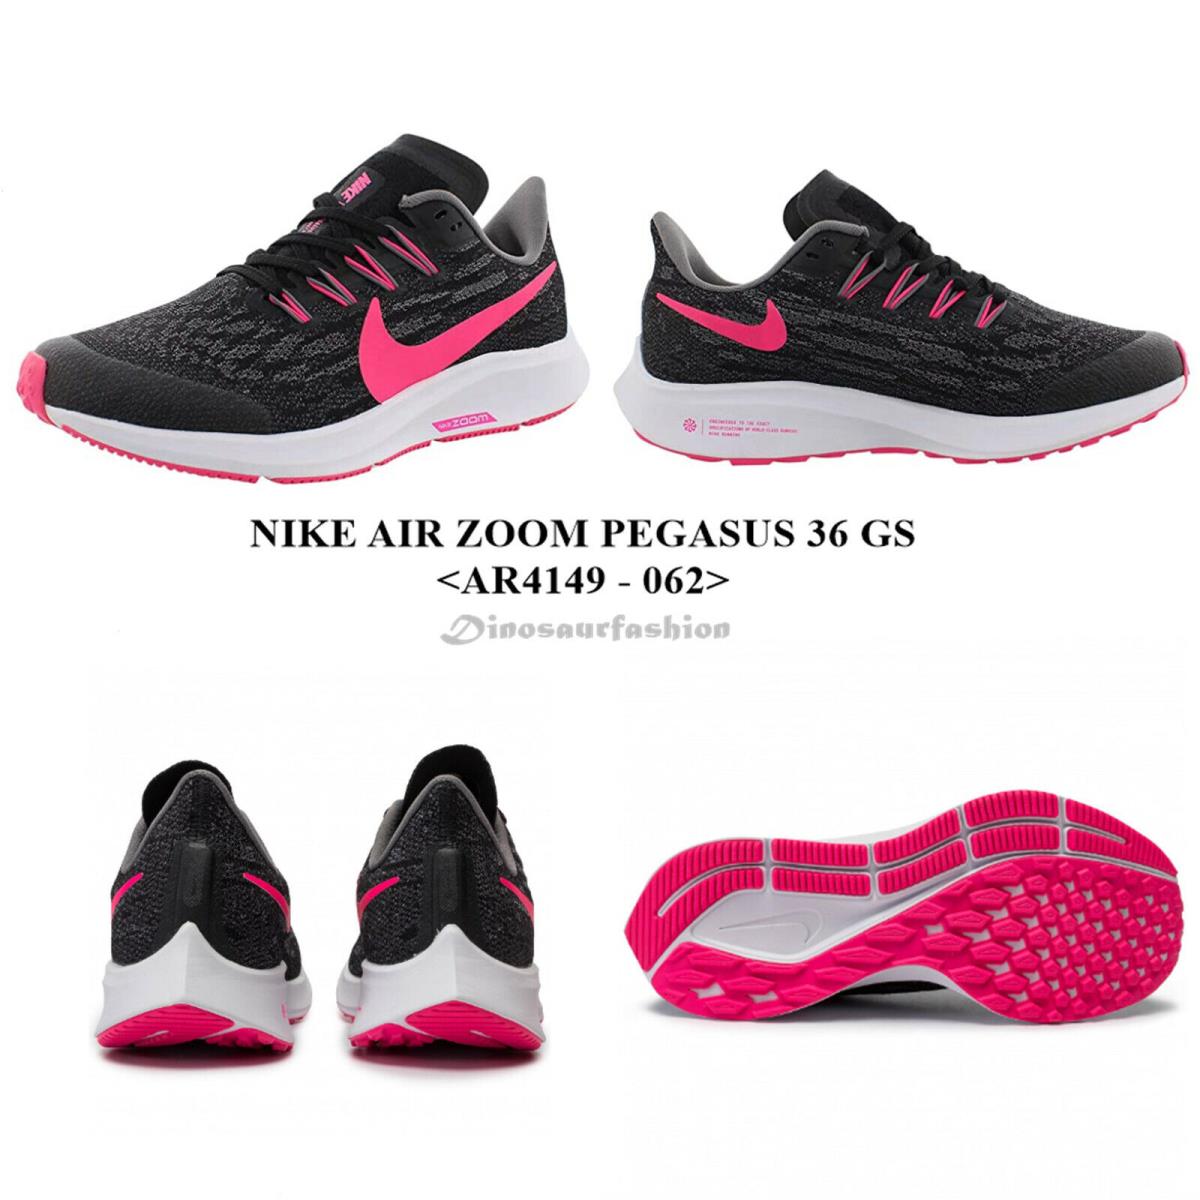 Nike Air Zoom Pegasus 36 GS <AR4149 - 062> Young Running/casual Shoe`s - BLACK/HYPER PINK-GUNSMOKE